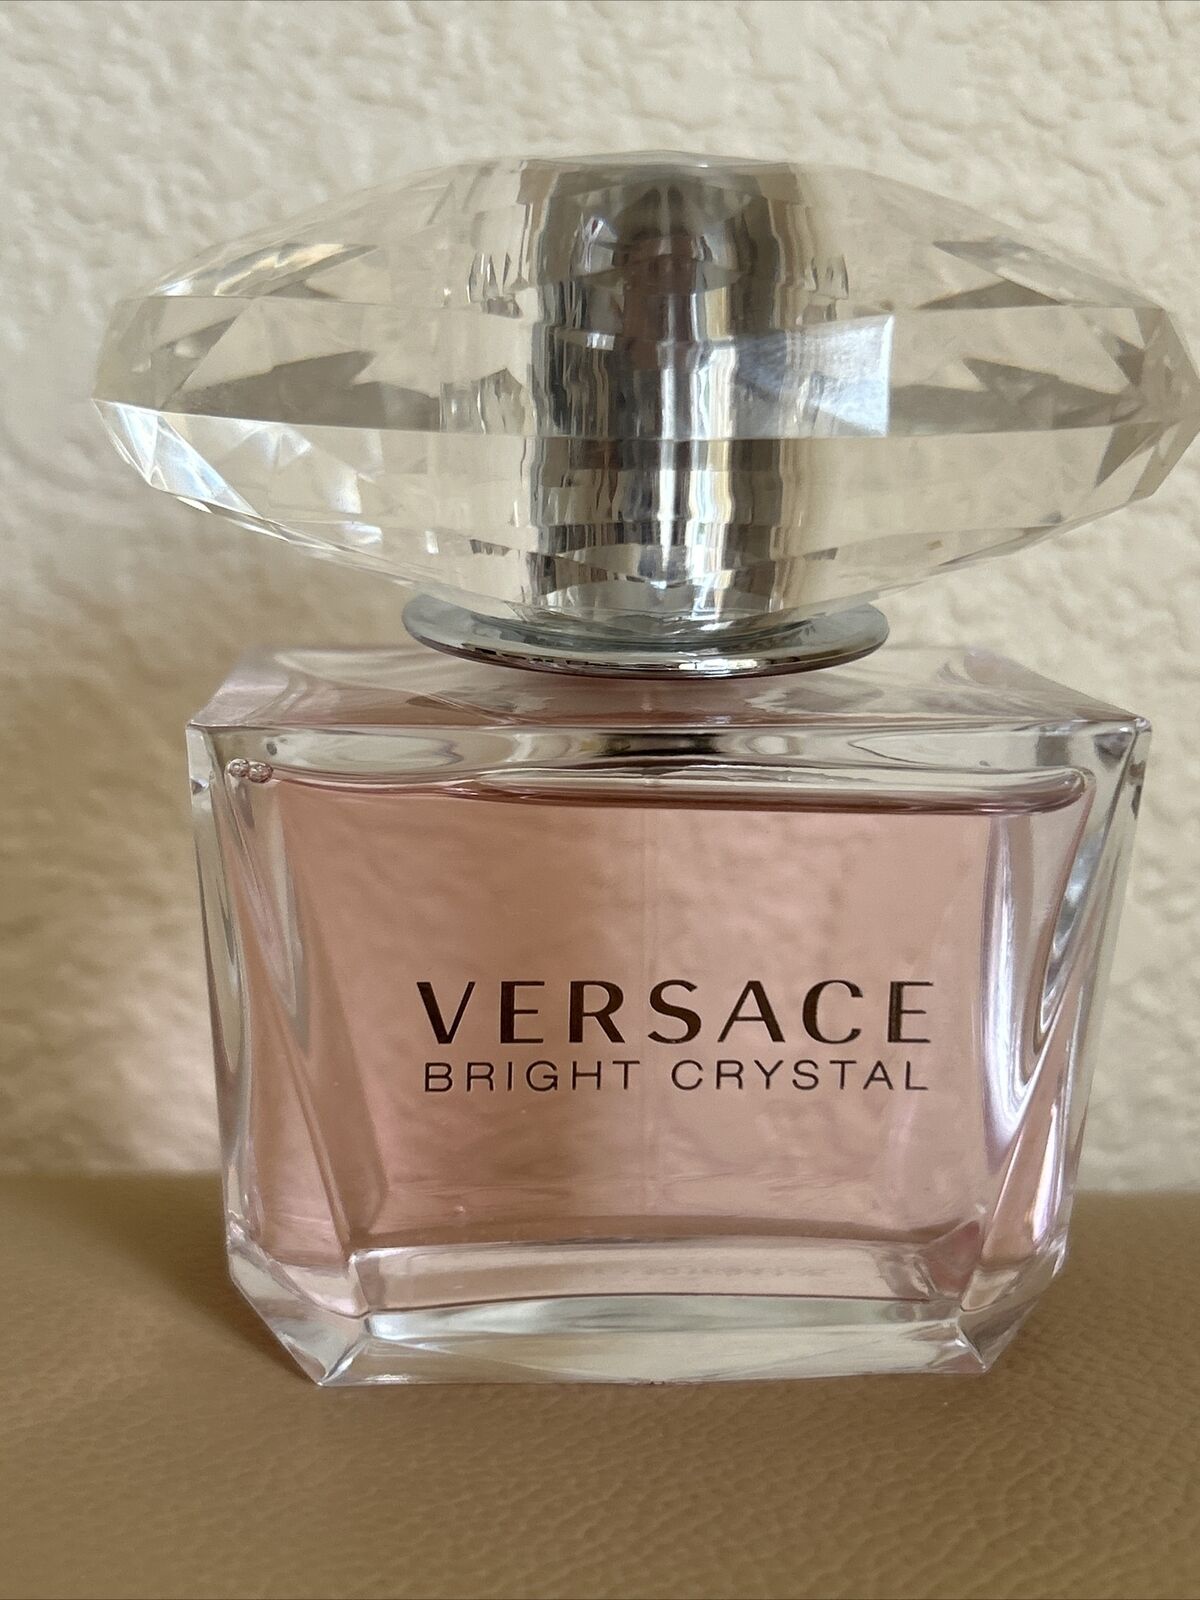 Versace Bright Crystal Eau De Toilette Perfume Spray 3.0 fl oz/ 90 mL 90% Full